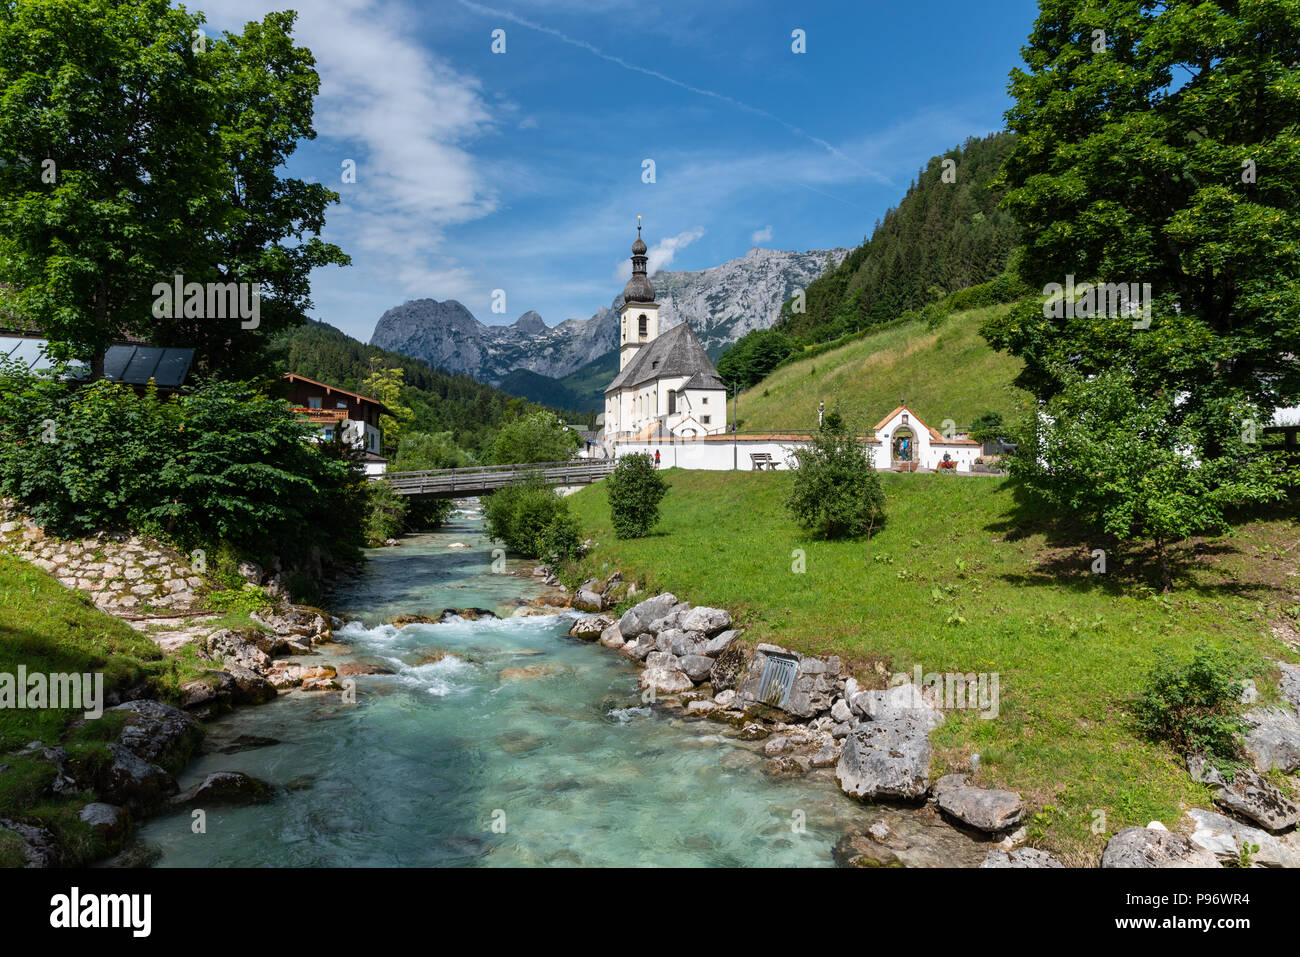 Pretty sunny scene of white church, river and mountains in Ramsau Bei Berchtesgaden, Bavaria Stock Photo